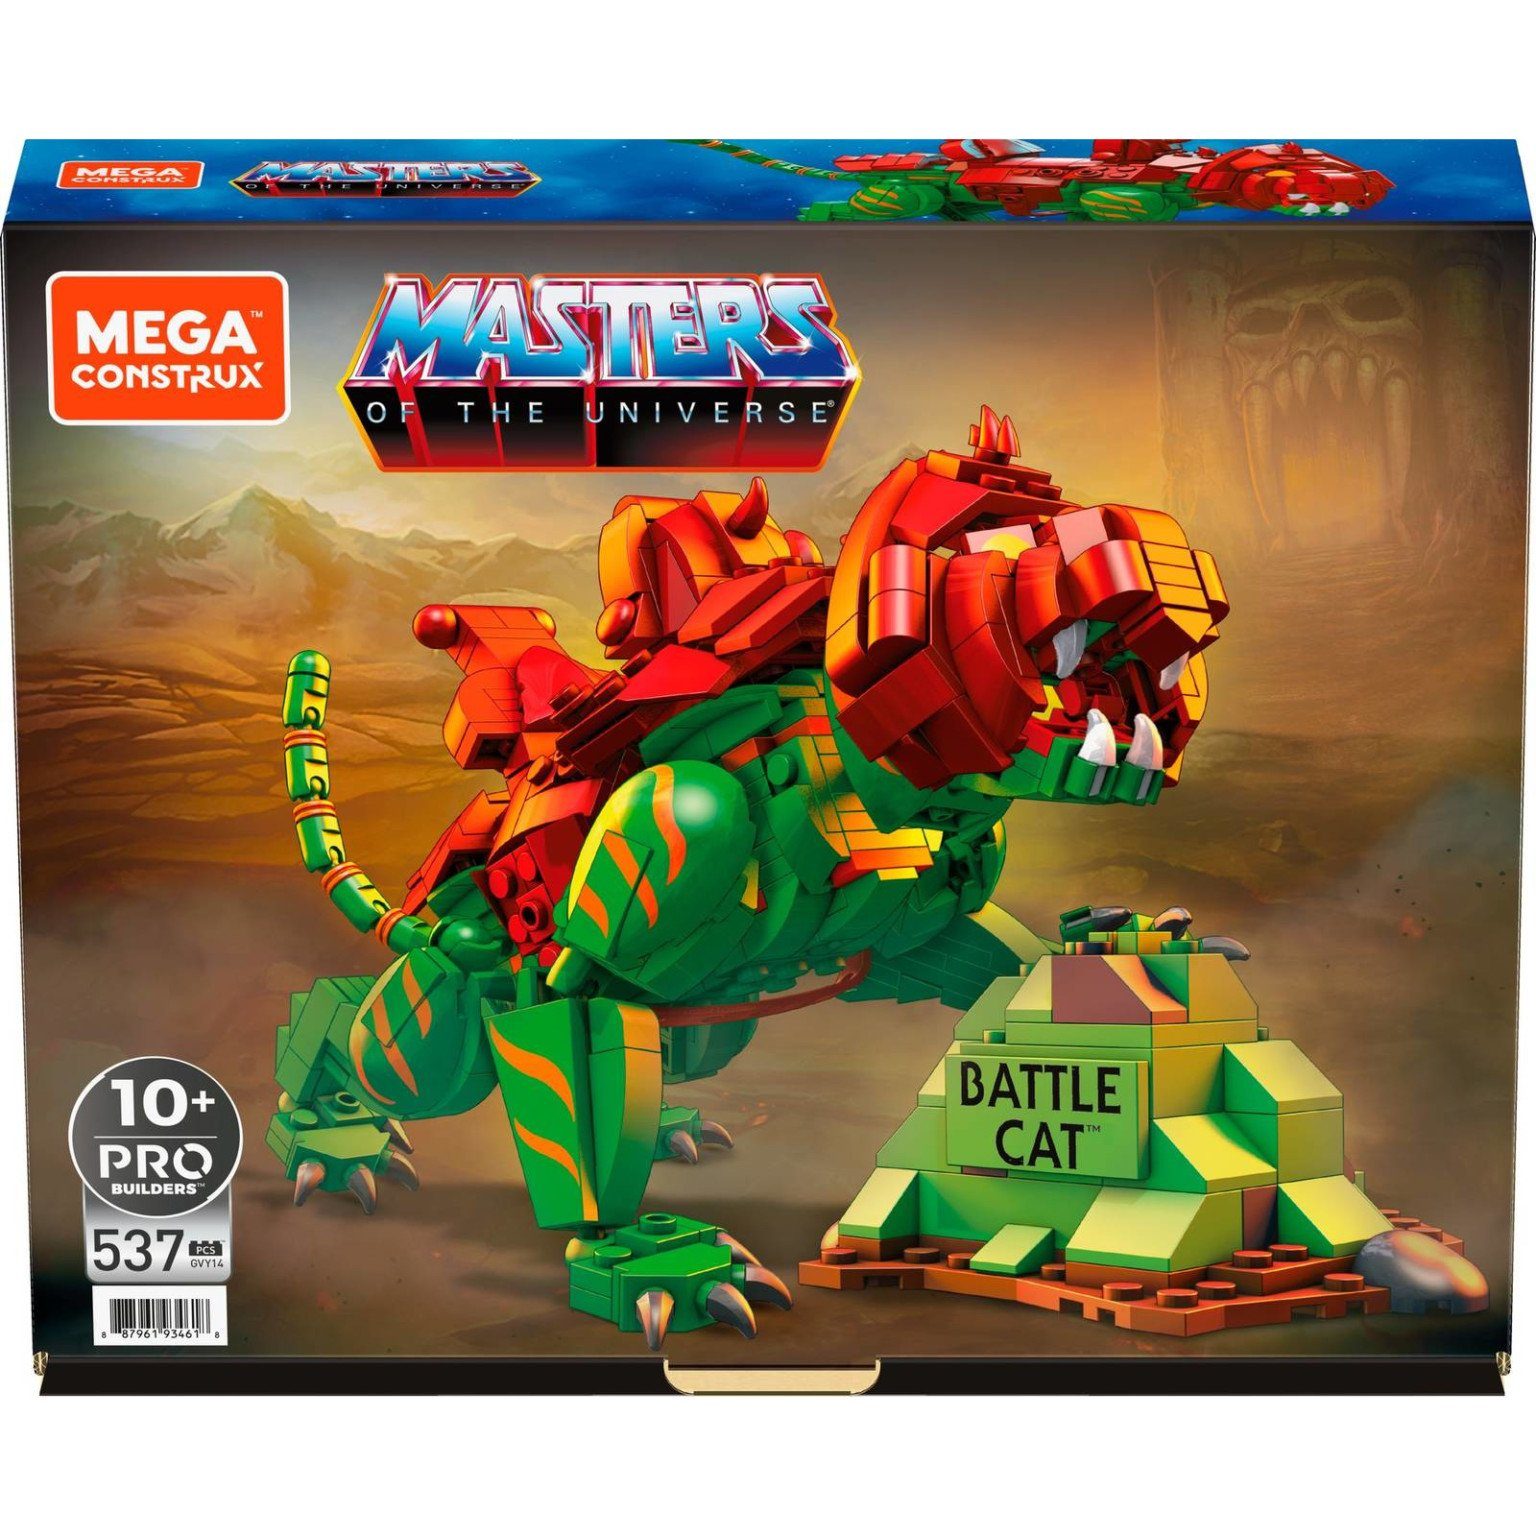 Mega (Tier) Universe Origi, Mattel of the Construx Spielbausteine Masters